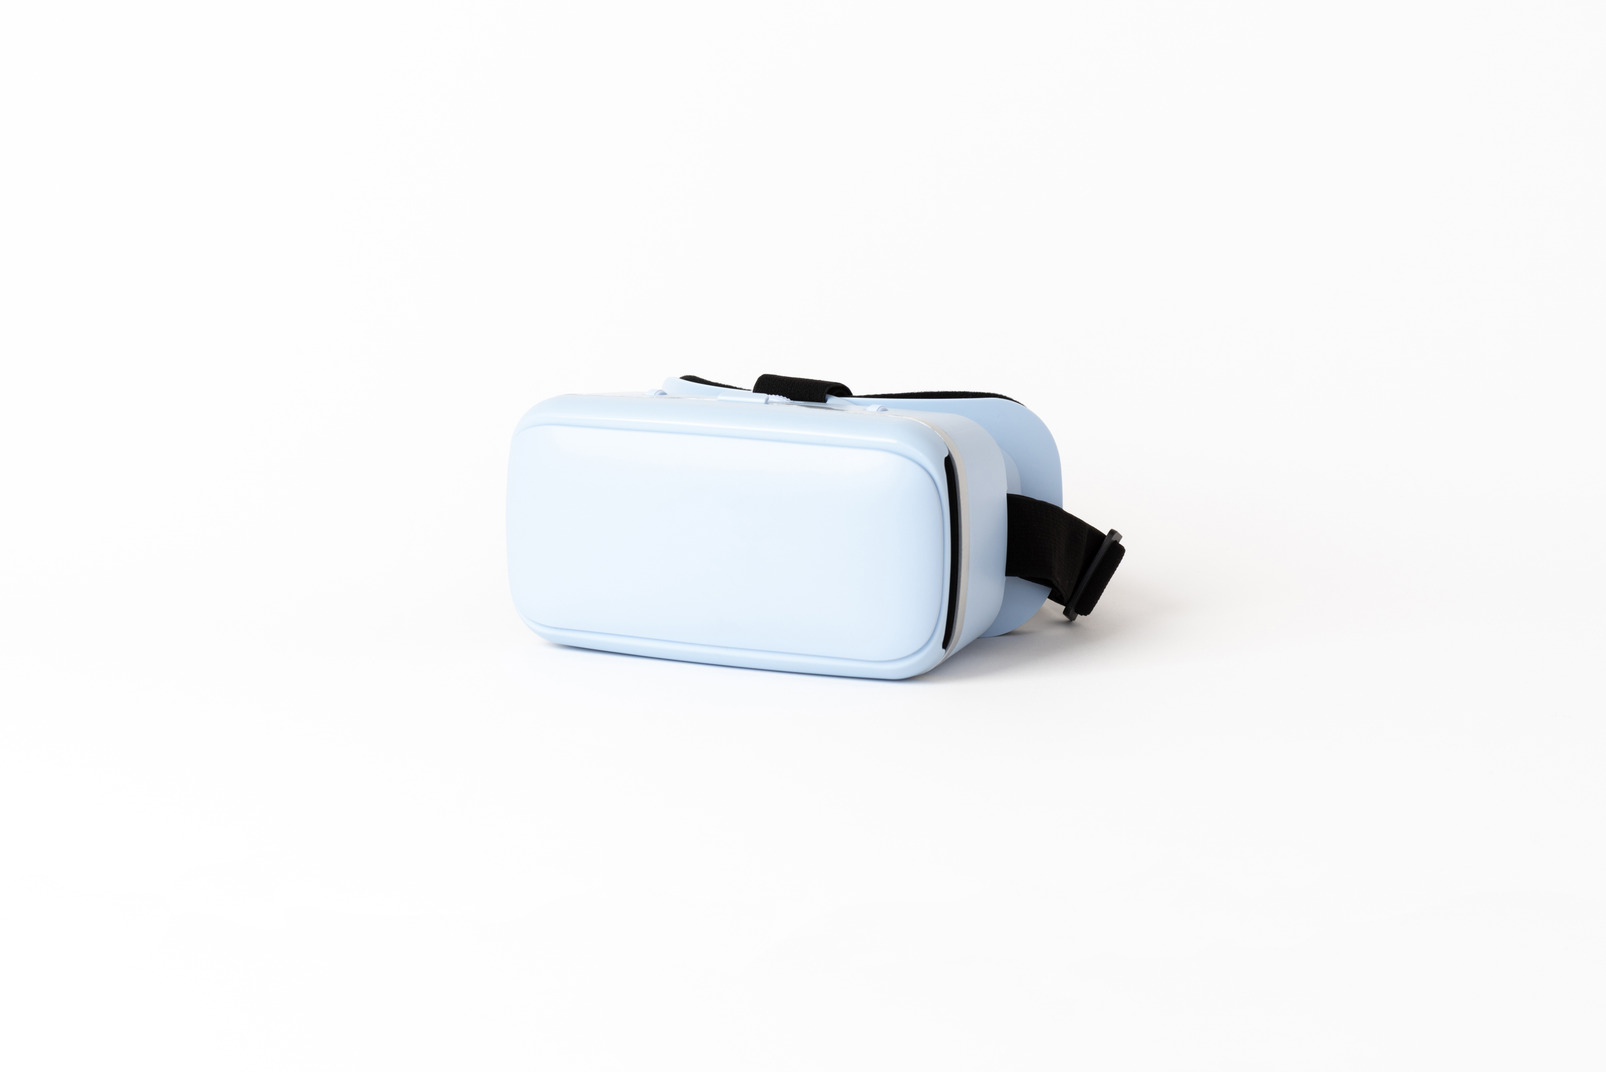 Virtual reality gadget on white background